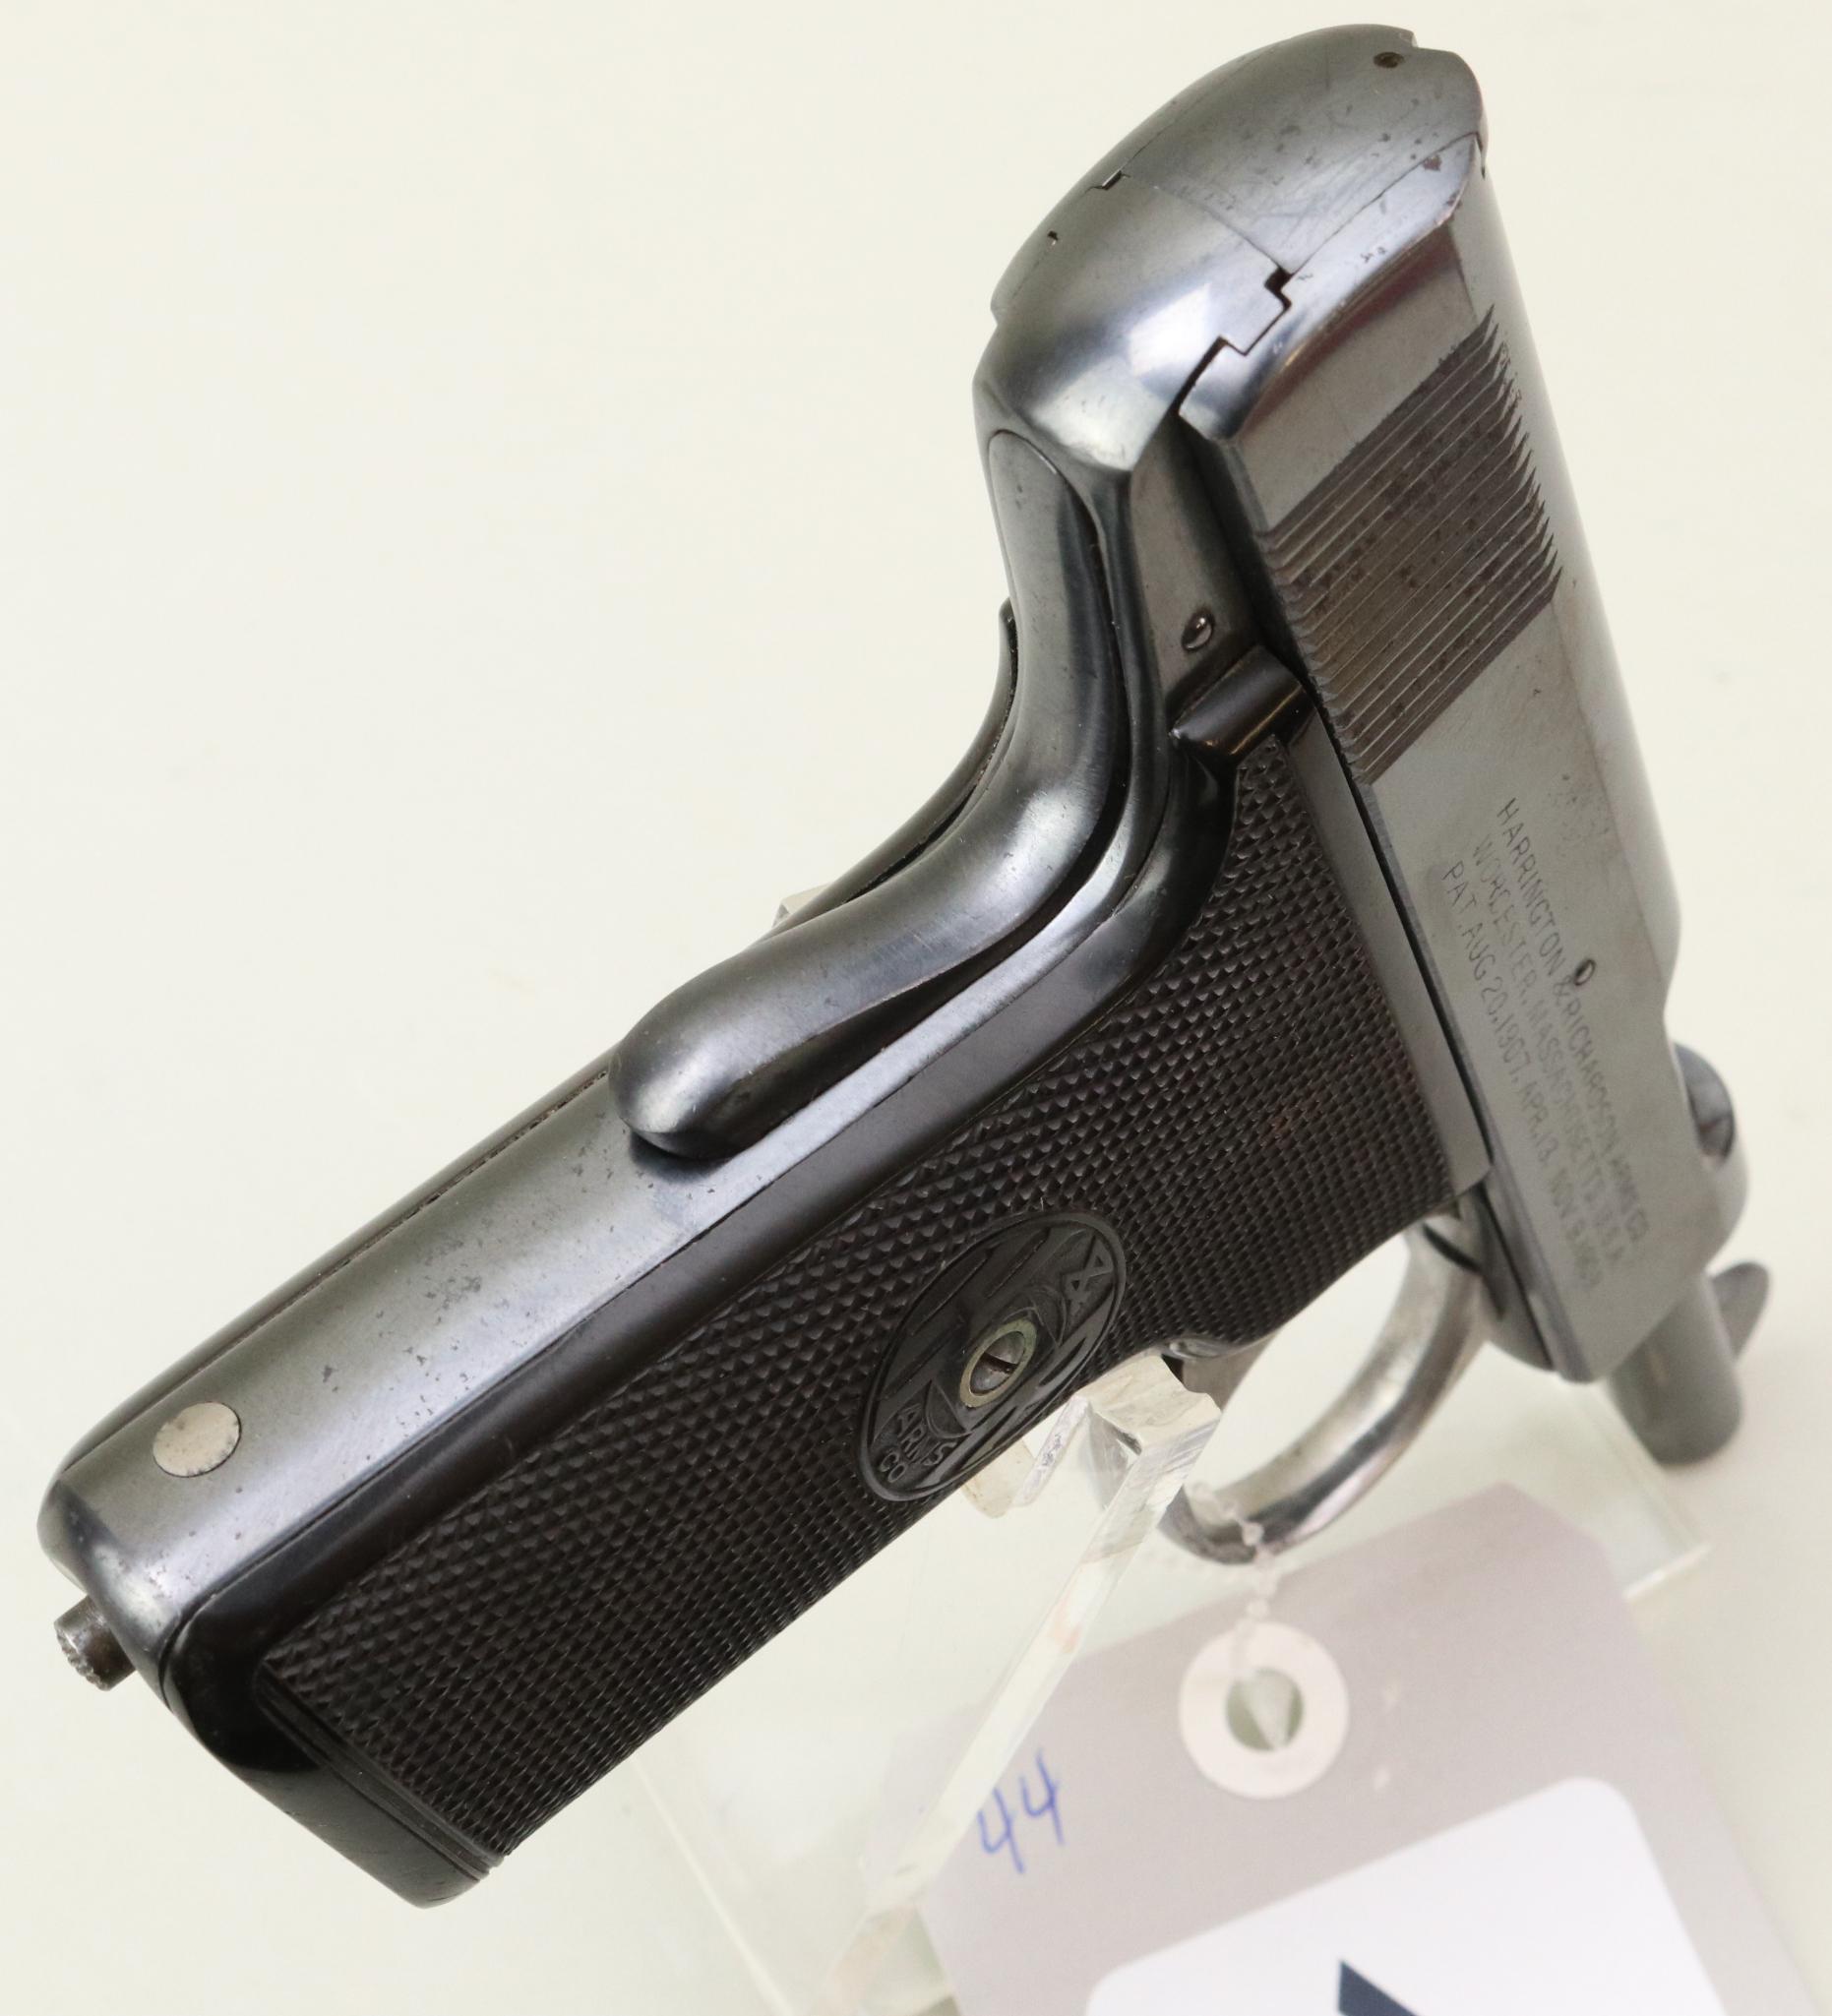 H&R Self Loading semi-automatic pistol.